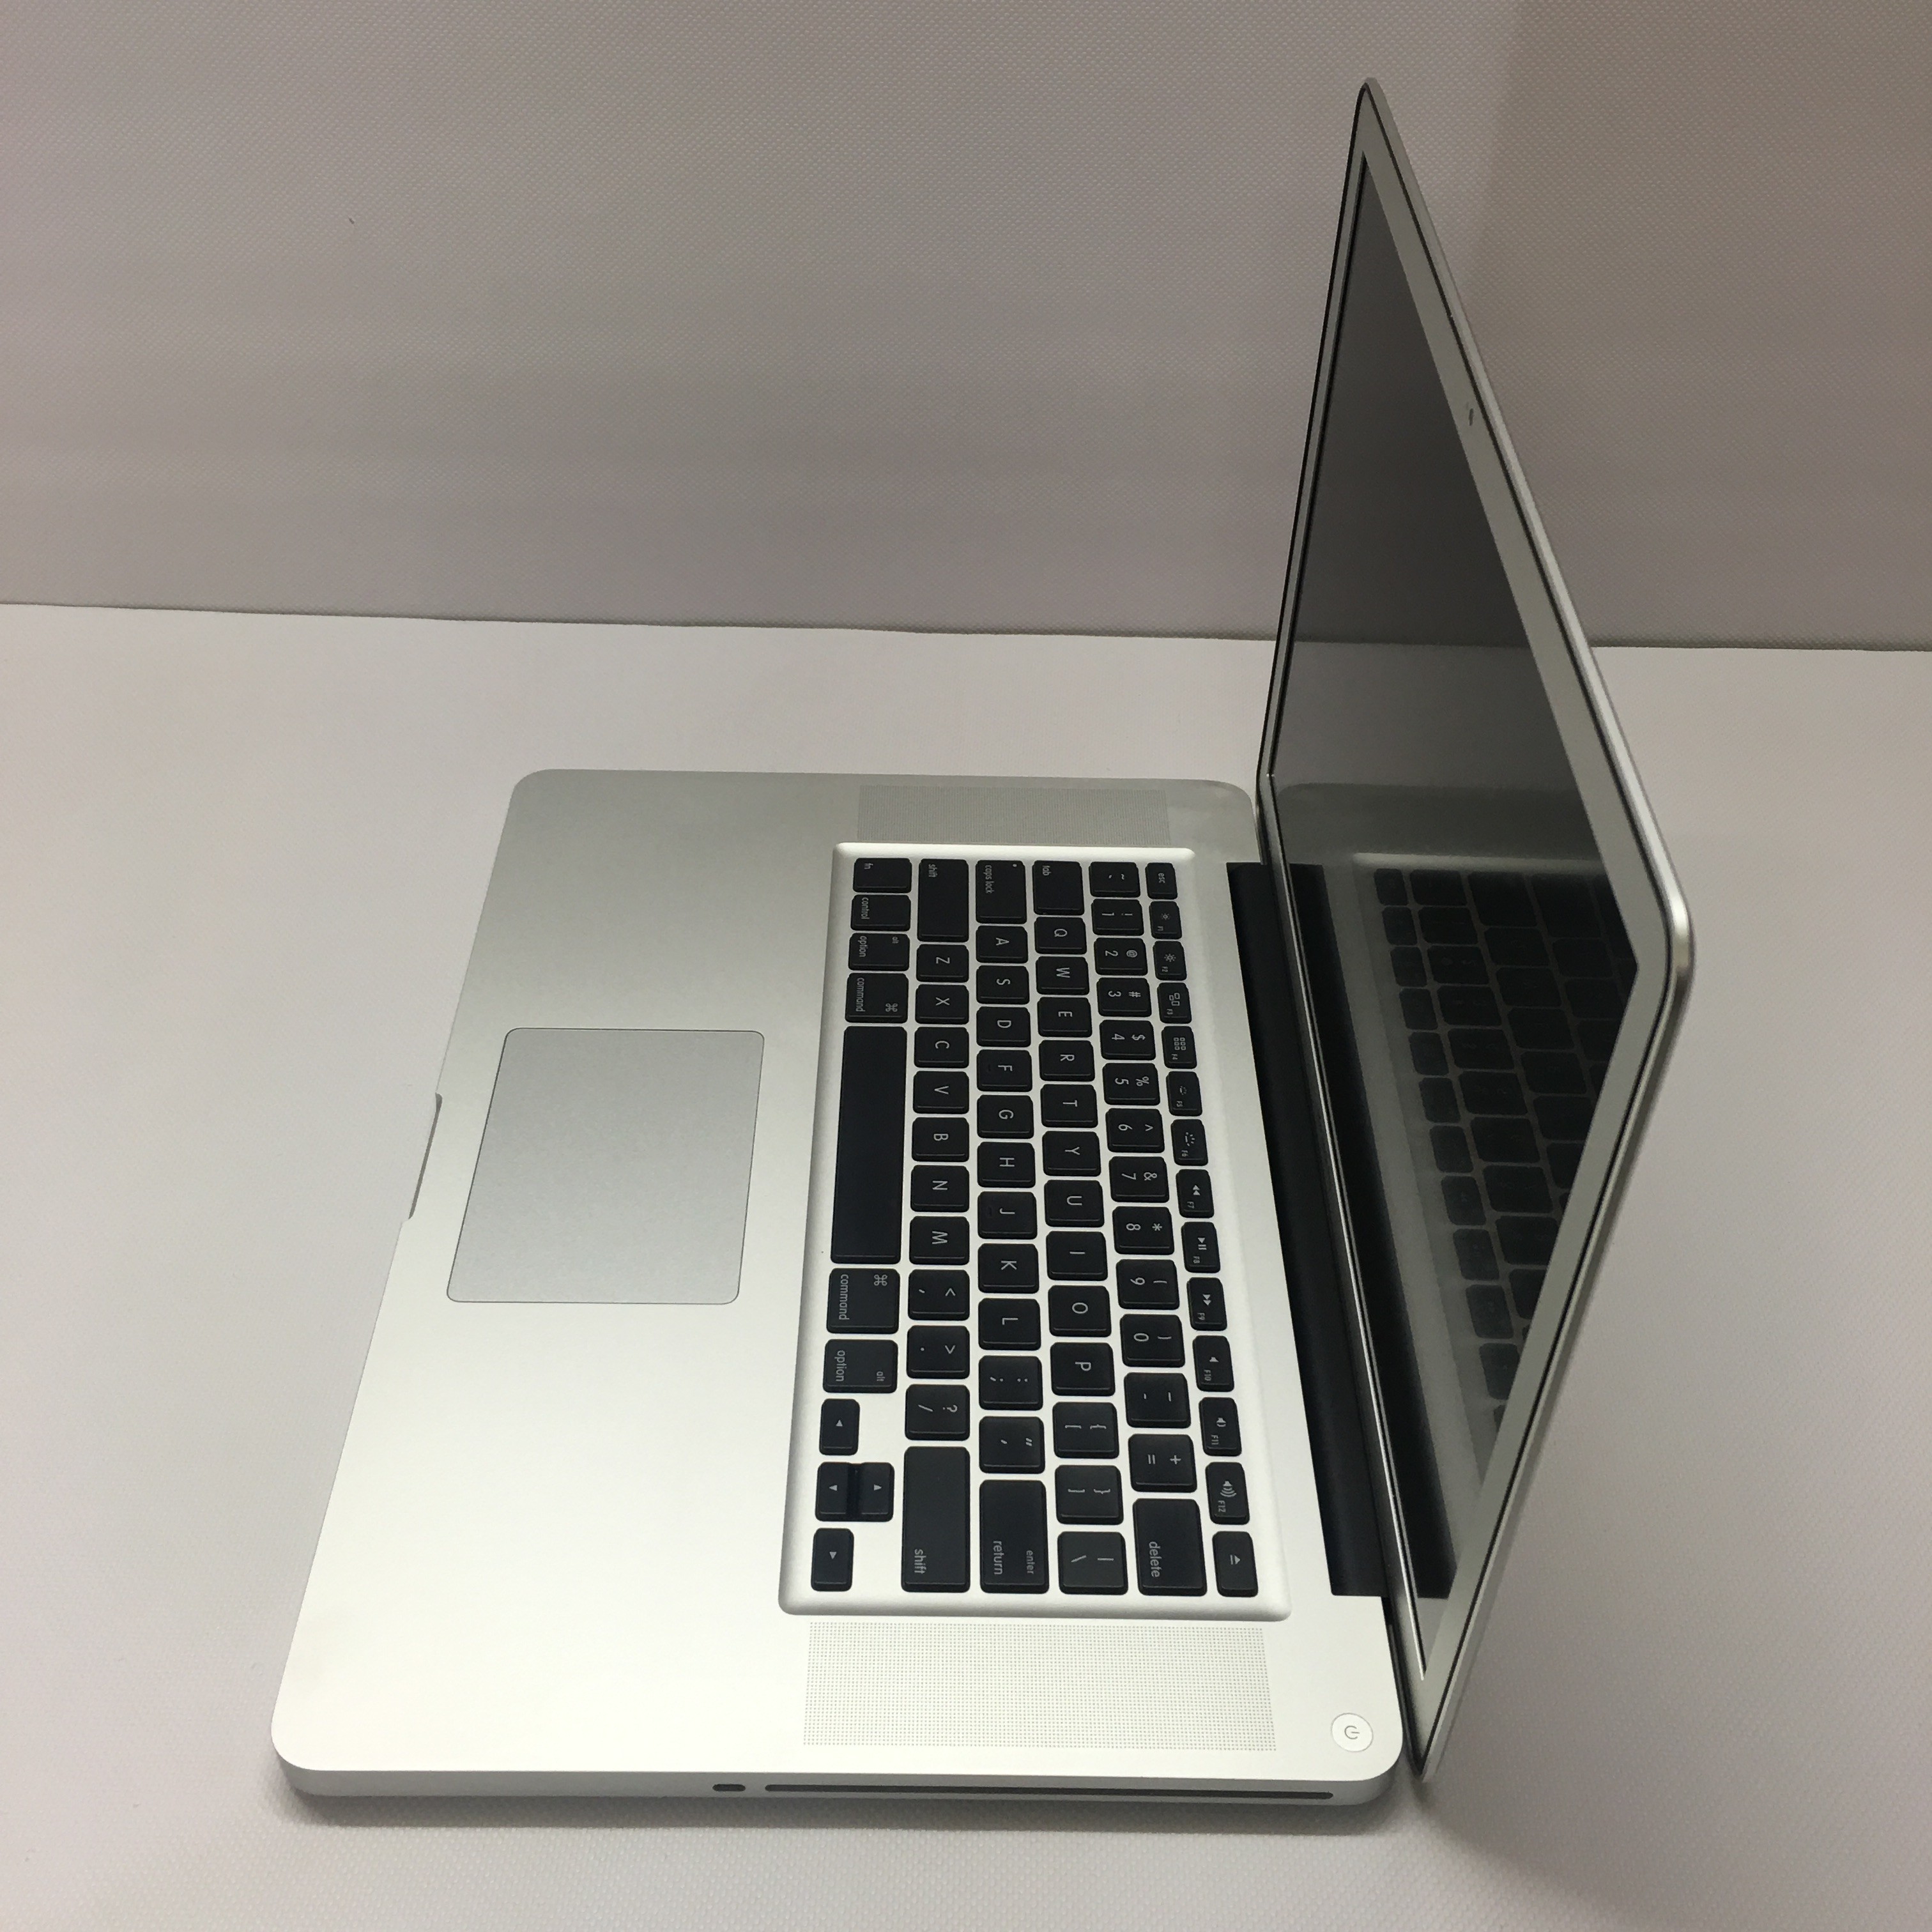 macbook refurbished 15 inch